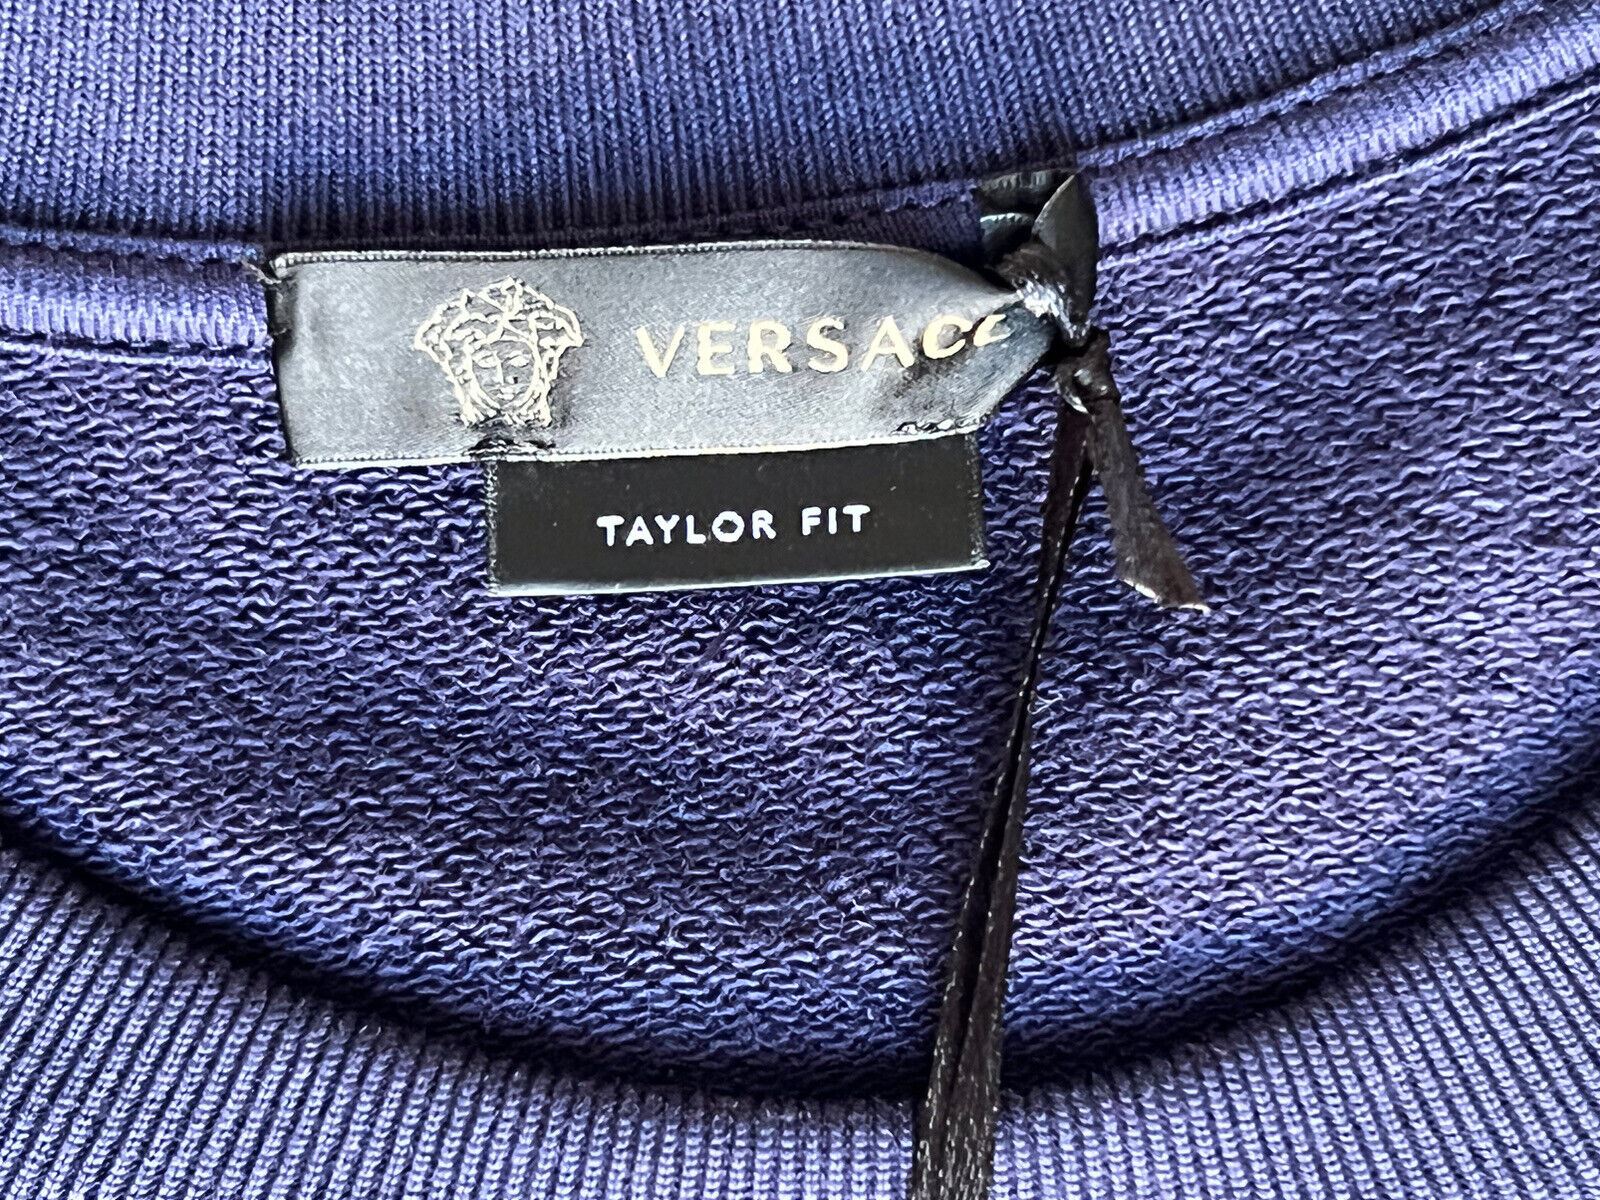 NWT $525 Versace Мужская толстовка с длинным рукавом синяя, размер 3XL A85327 Италия 